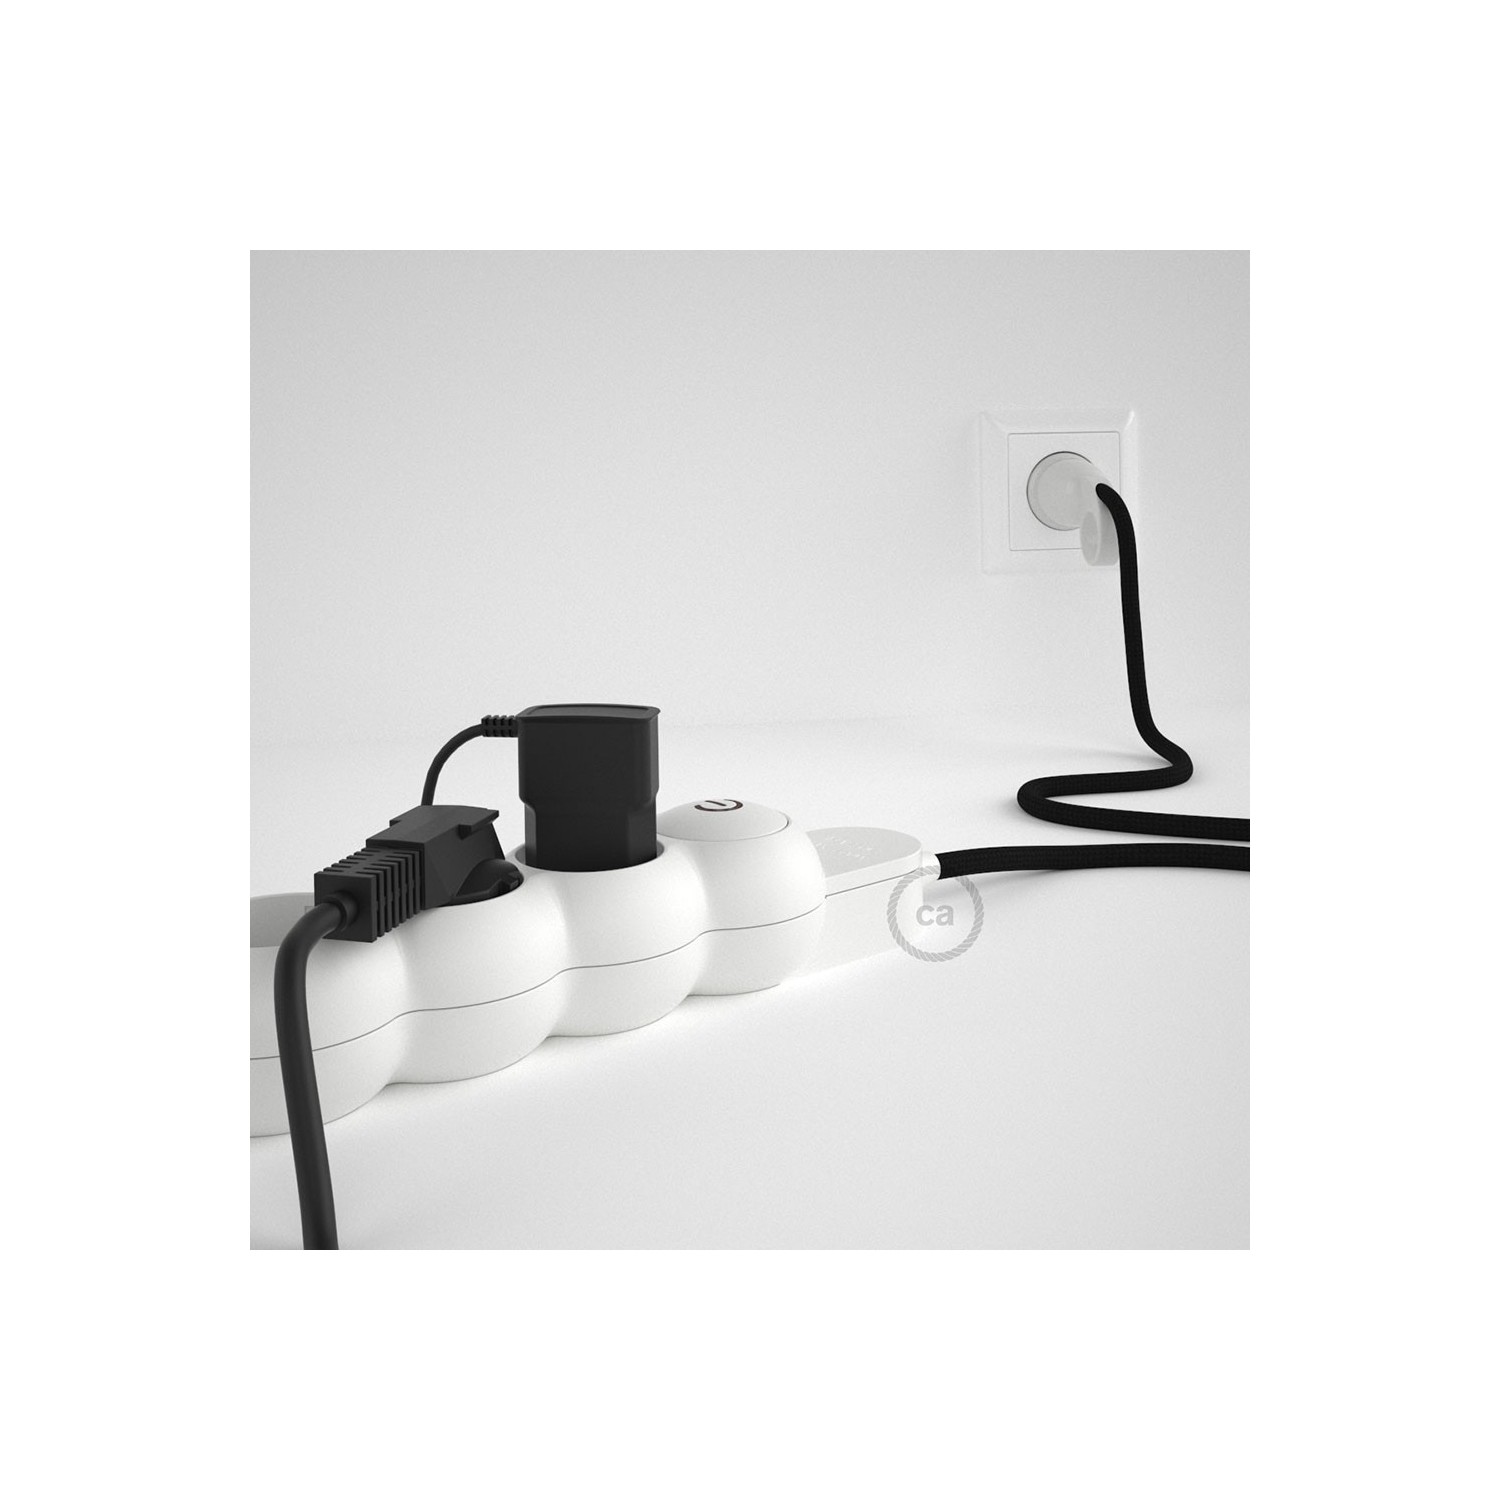 Stekkerdoos met strijkijzersnoer van zwart viscose RM04 en randaarde stekker met comfortabele "ring" grip